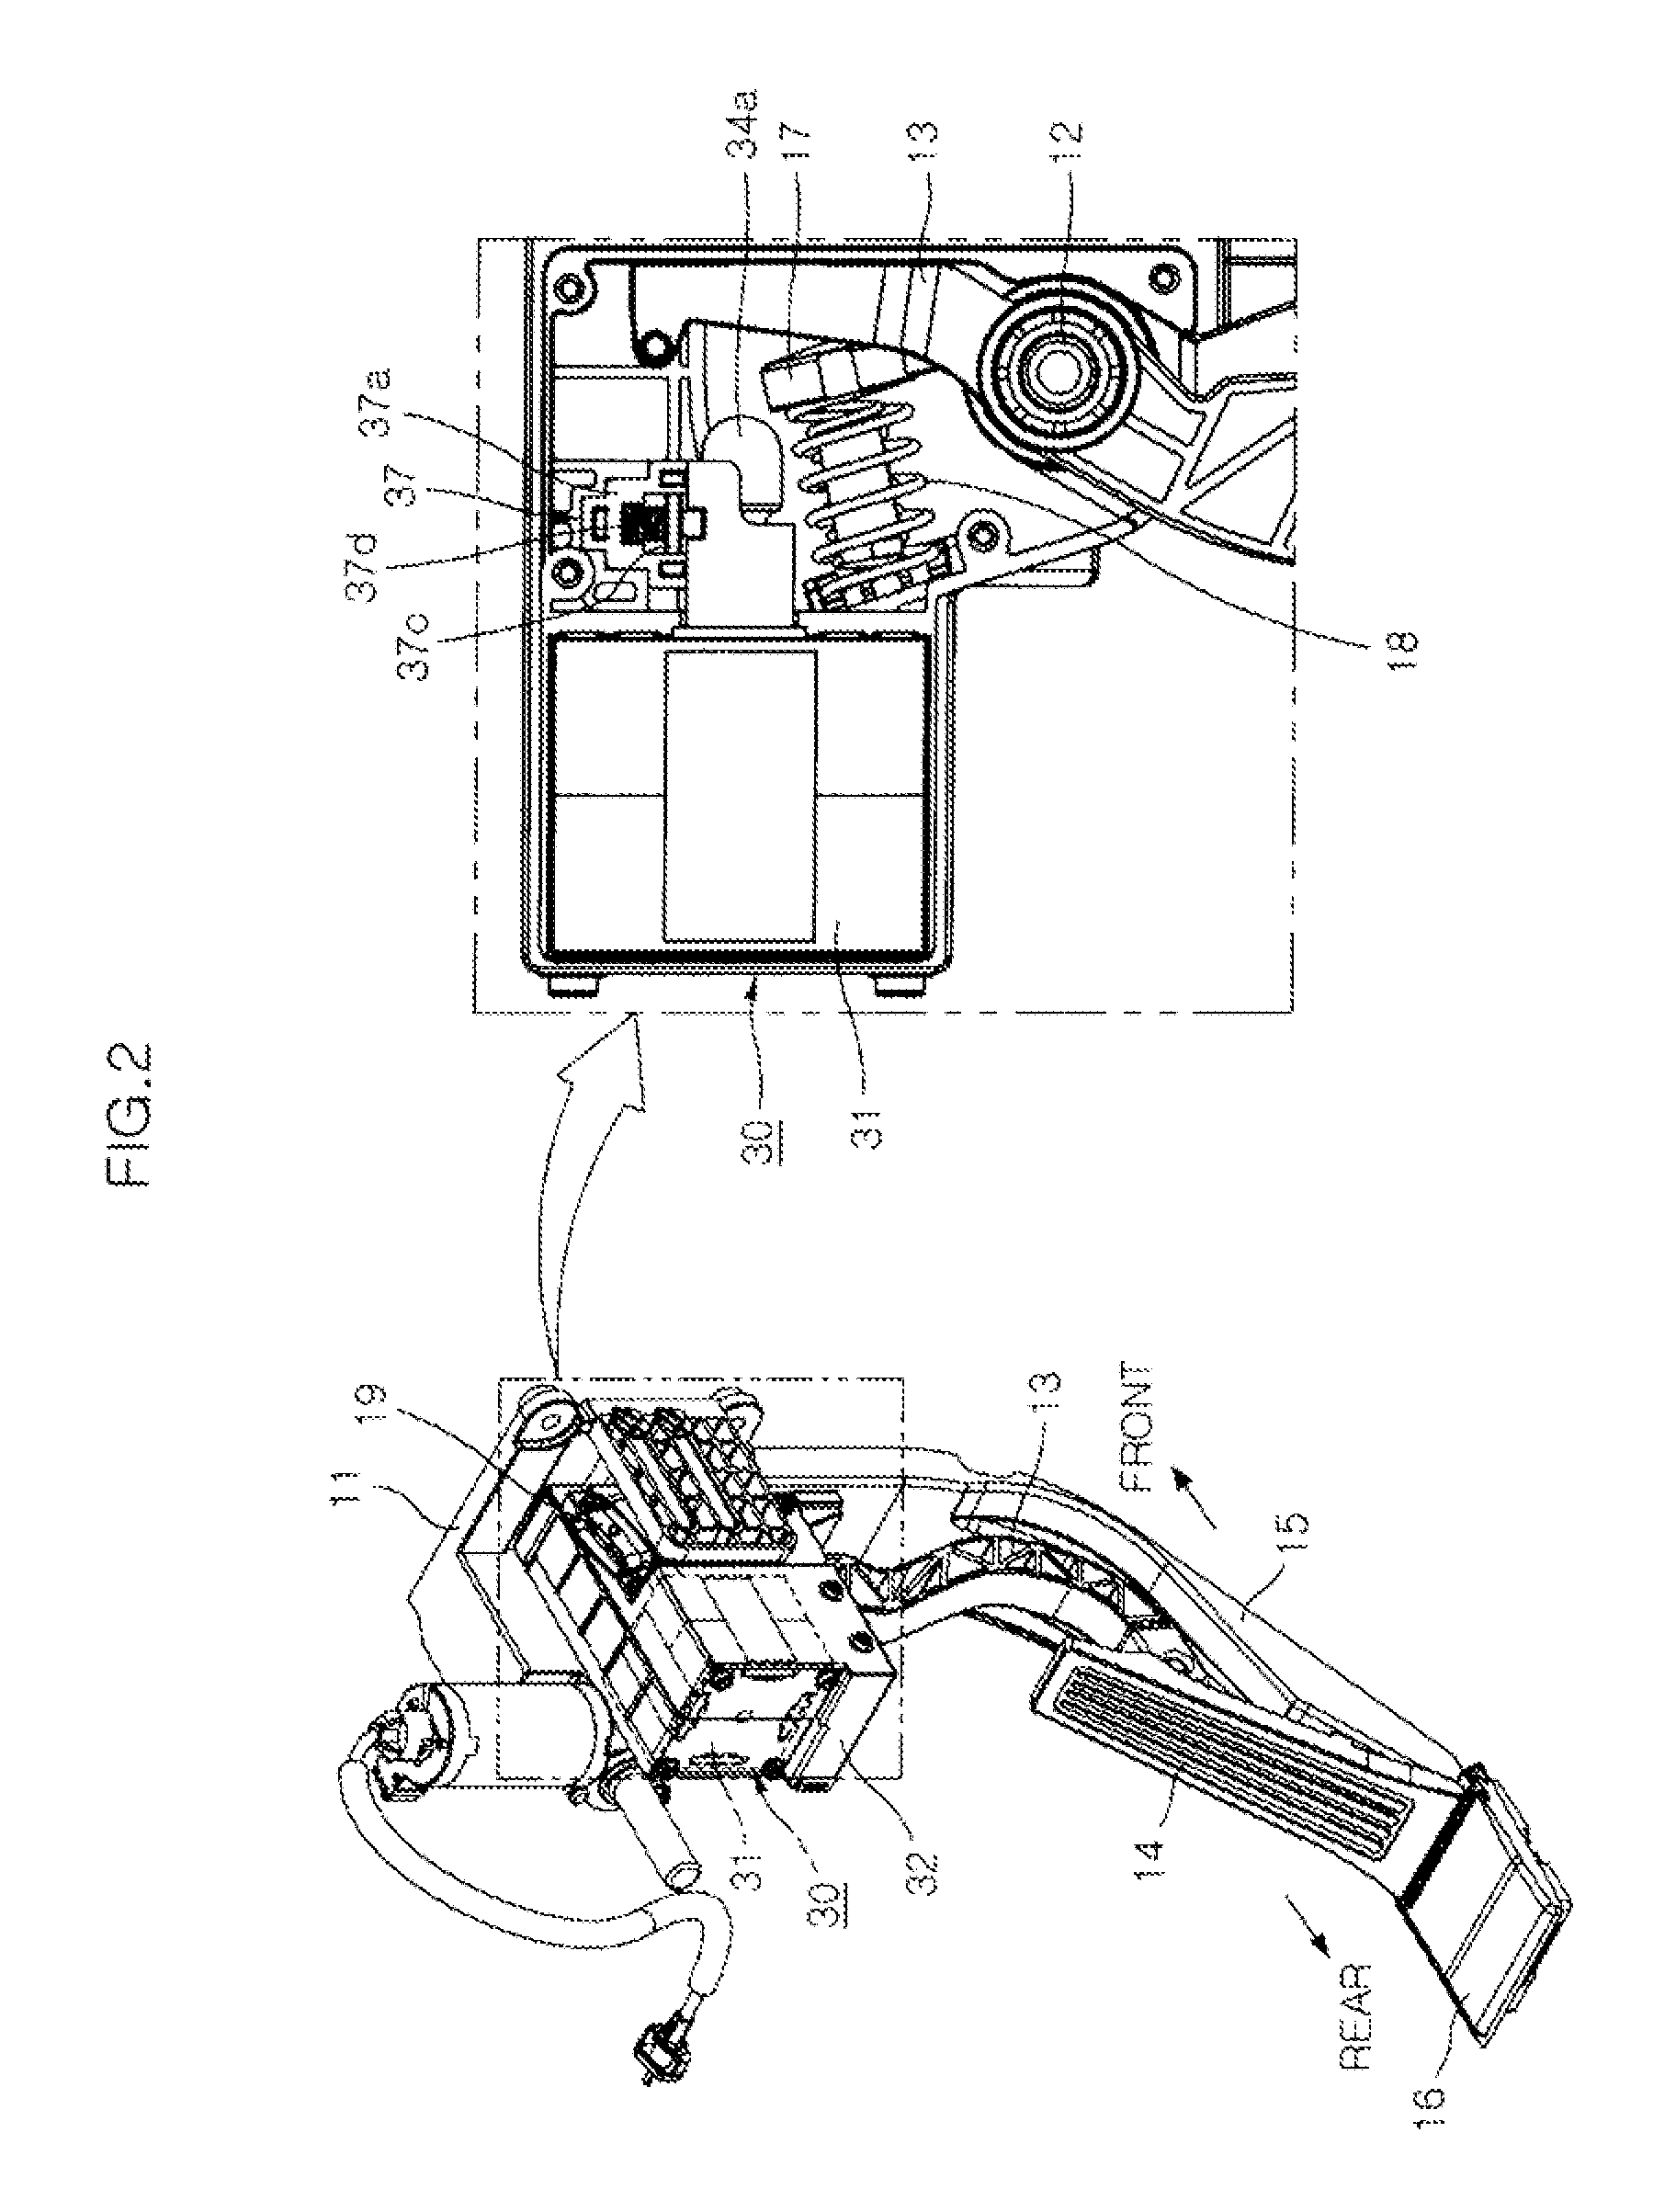 Actuator apparatus of active accelerator pedal